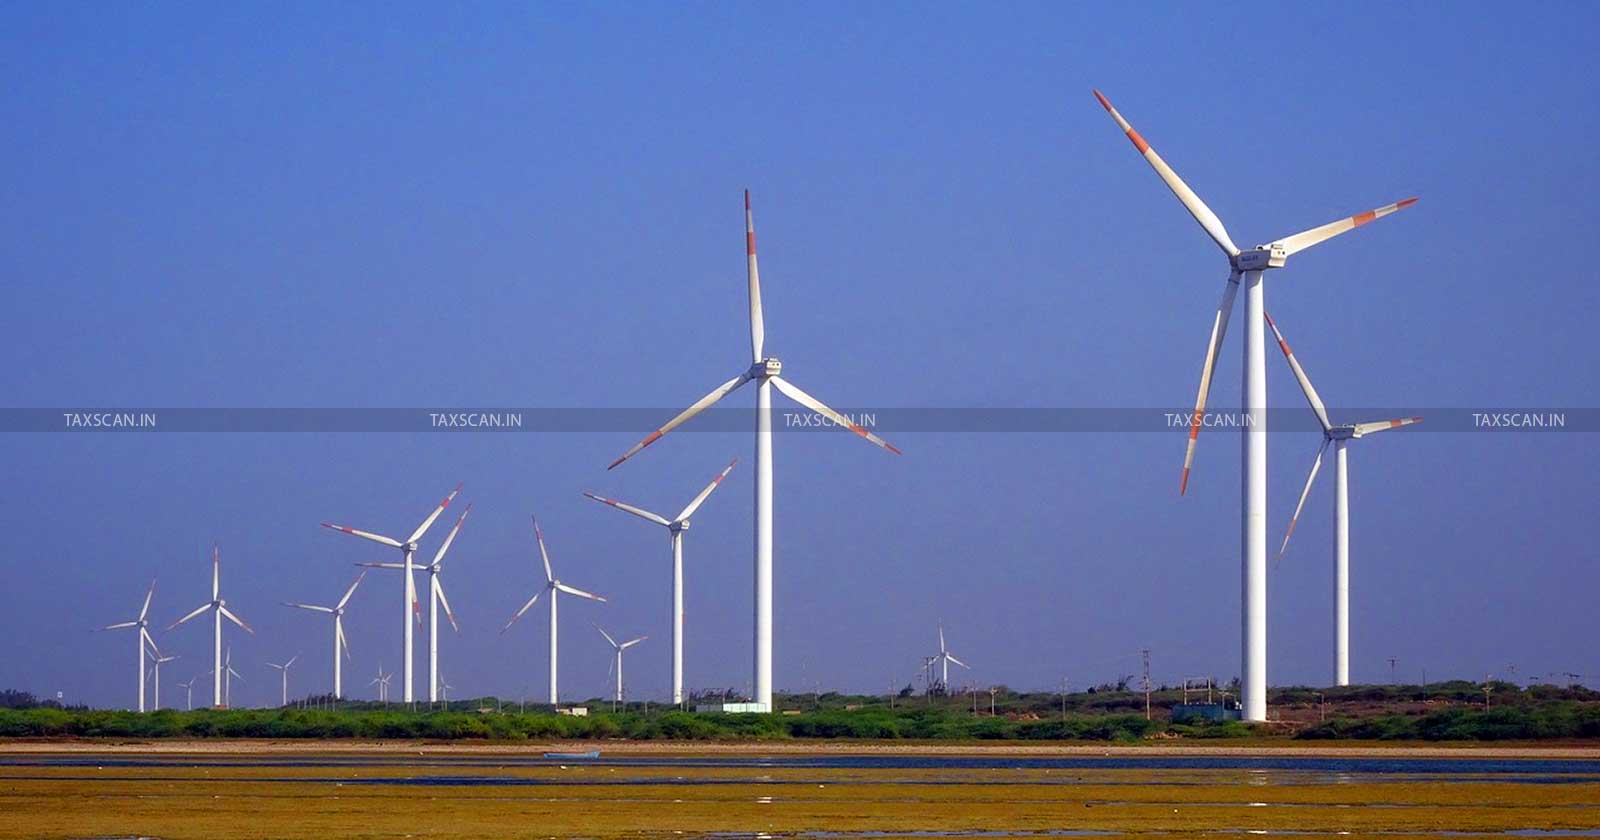 Wind Operated Electricity Generators - Flanges exemption - Excise Duty Exemption - Renewable energy - CESTAT - taxscan